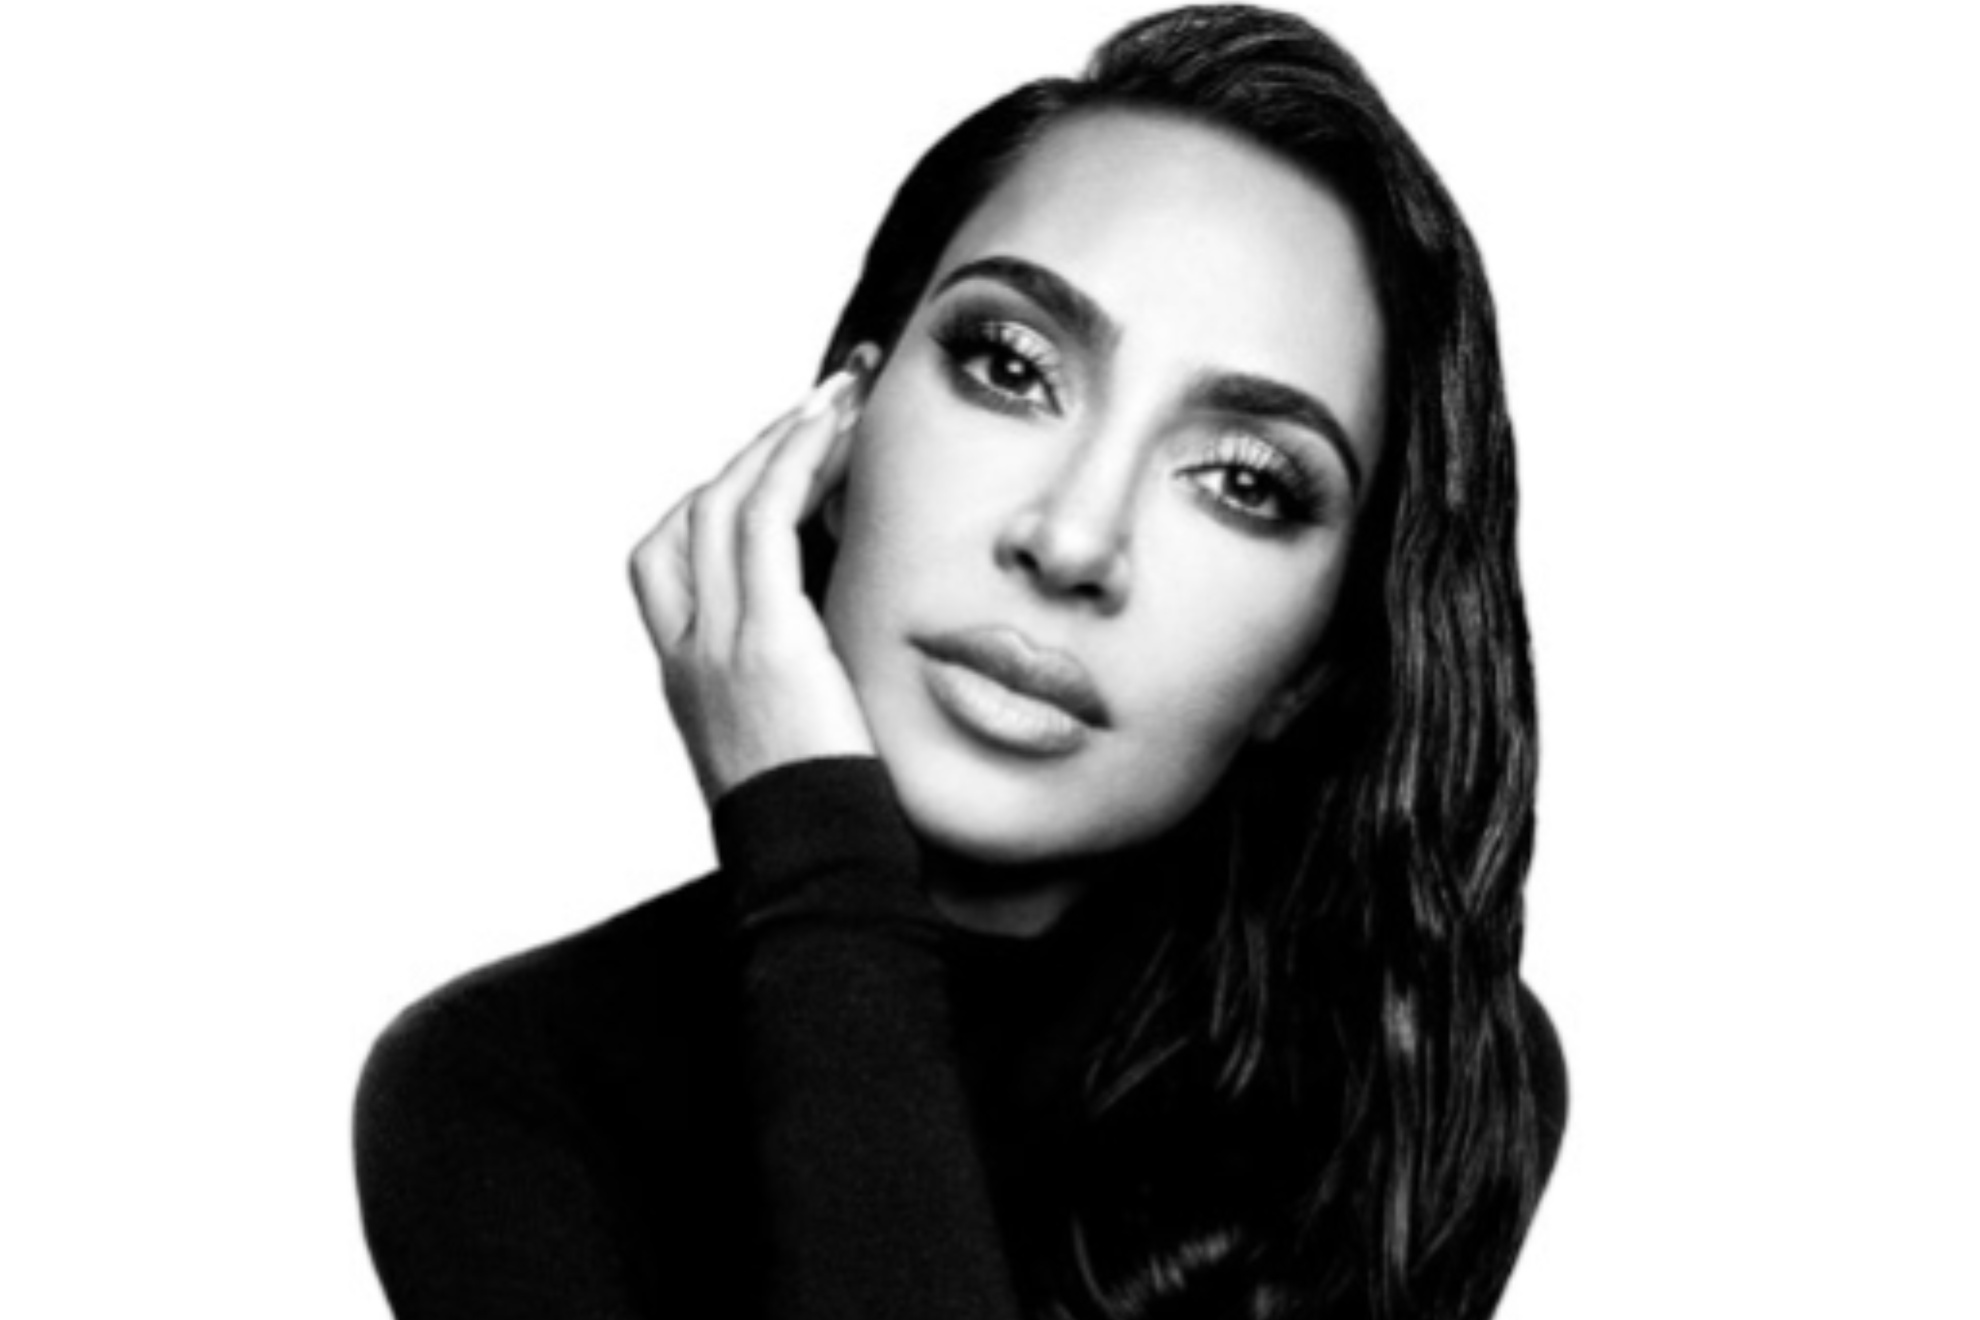 Kim Kardashian West unveils latest collaboration